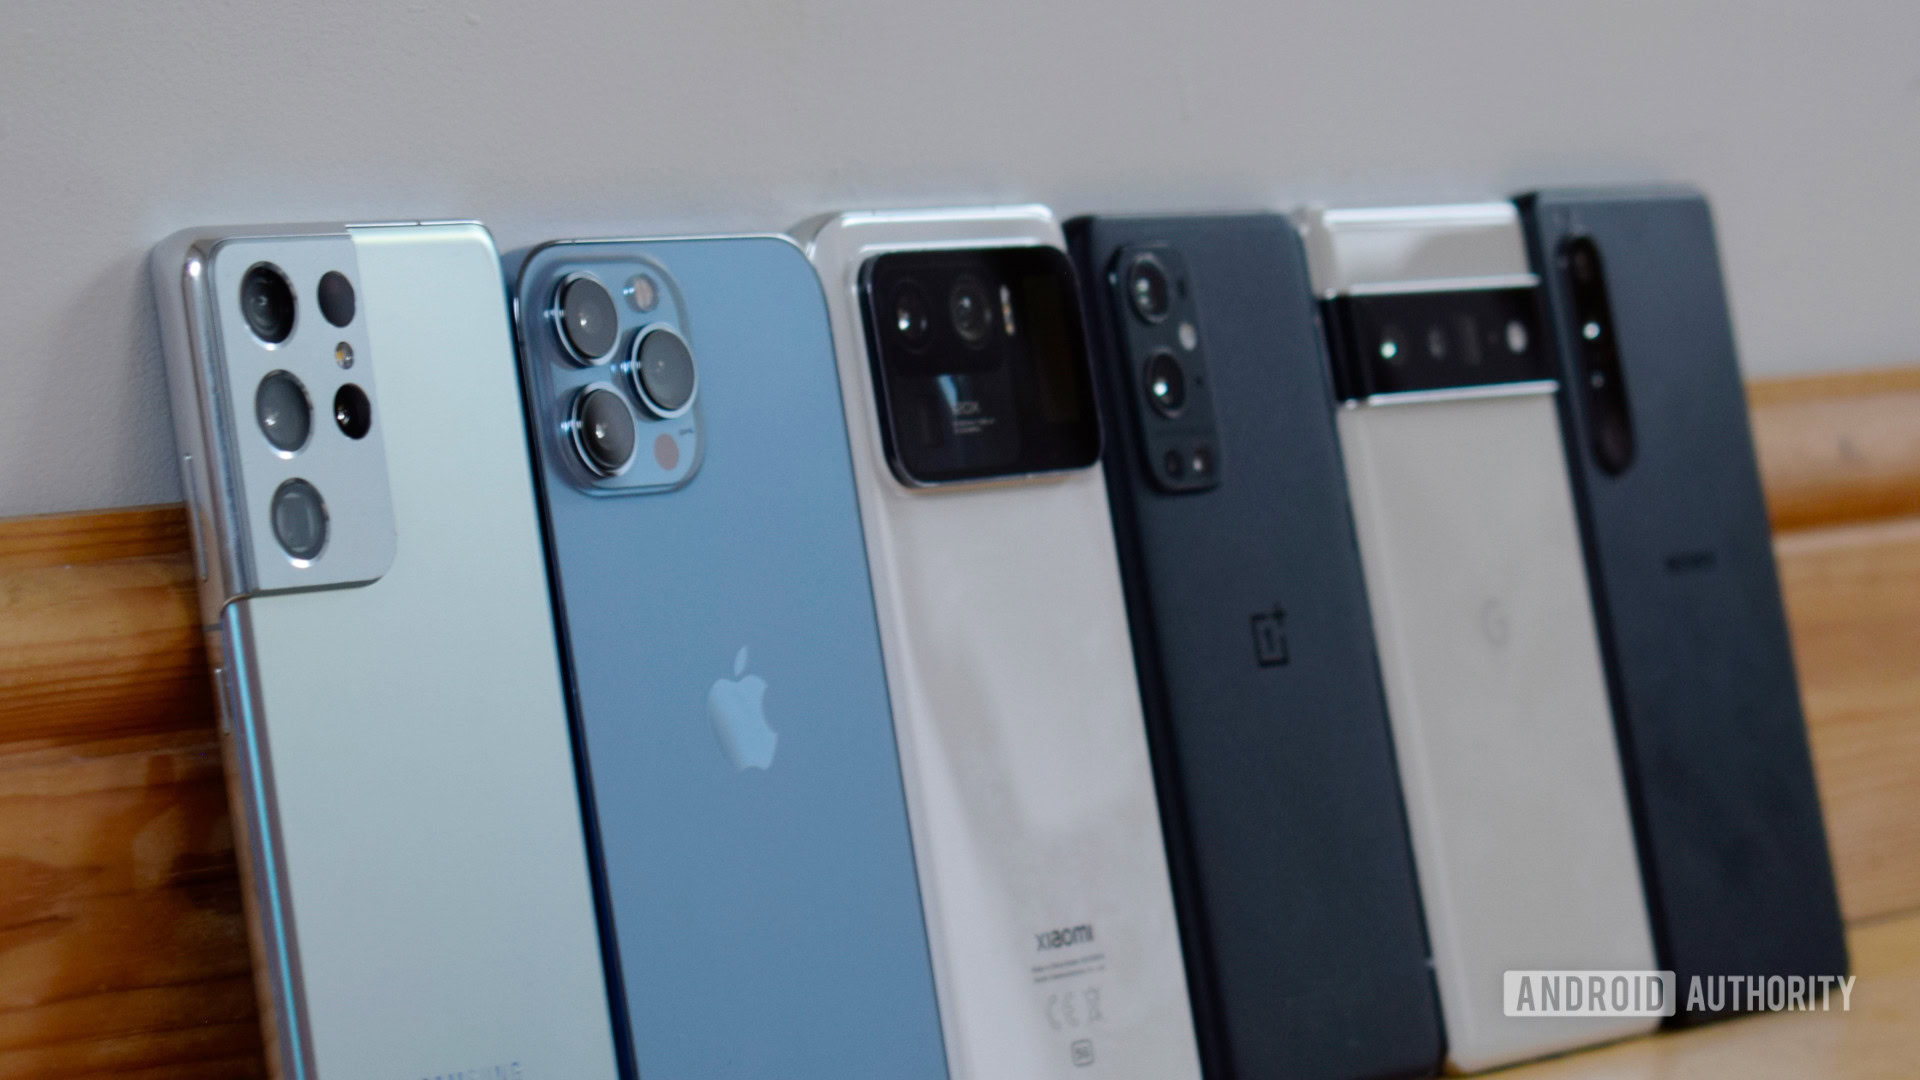 Las mejores cámaras para teléfonos inteligentes 2021 - Apple iPhone 13 Pro Max, Google Pixel 6 Pro, OnePlus 9 Pro, Samsung Galaxy S21 Ultra, Sony Xperia 1 III, Xiaomi Mi 11 Ultra